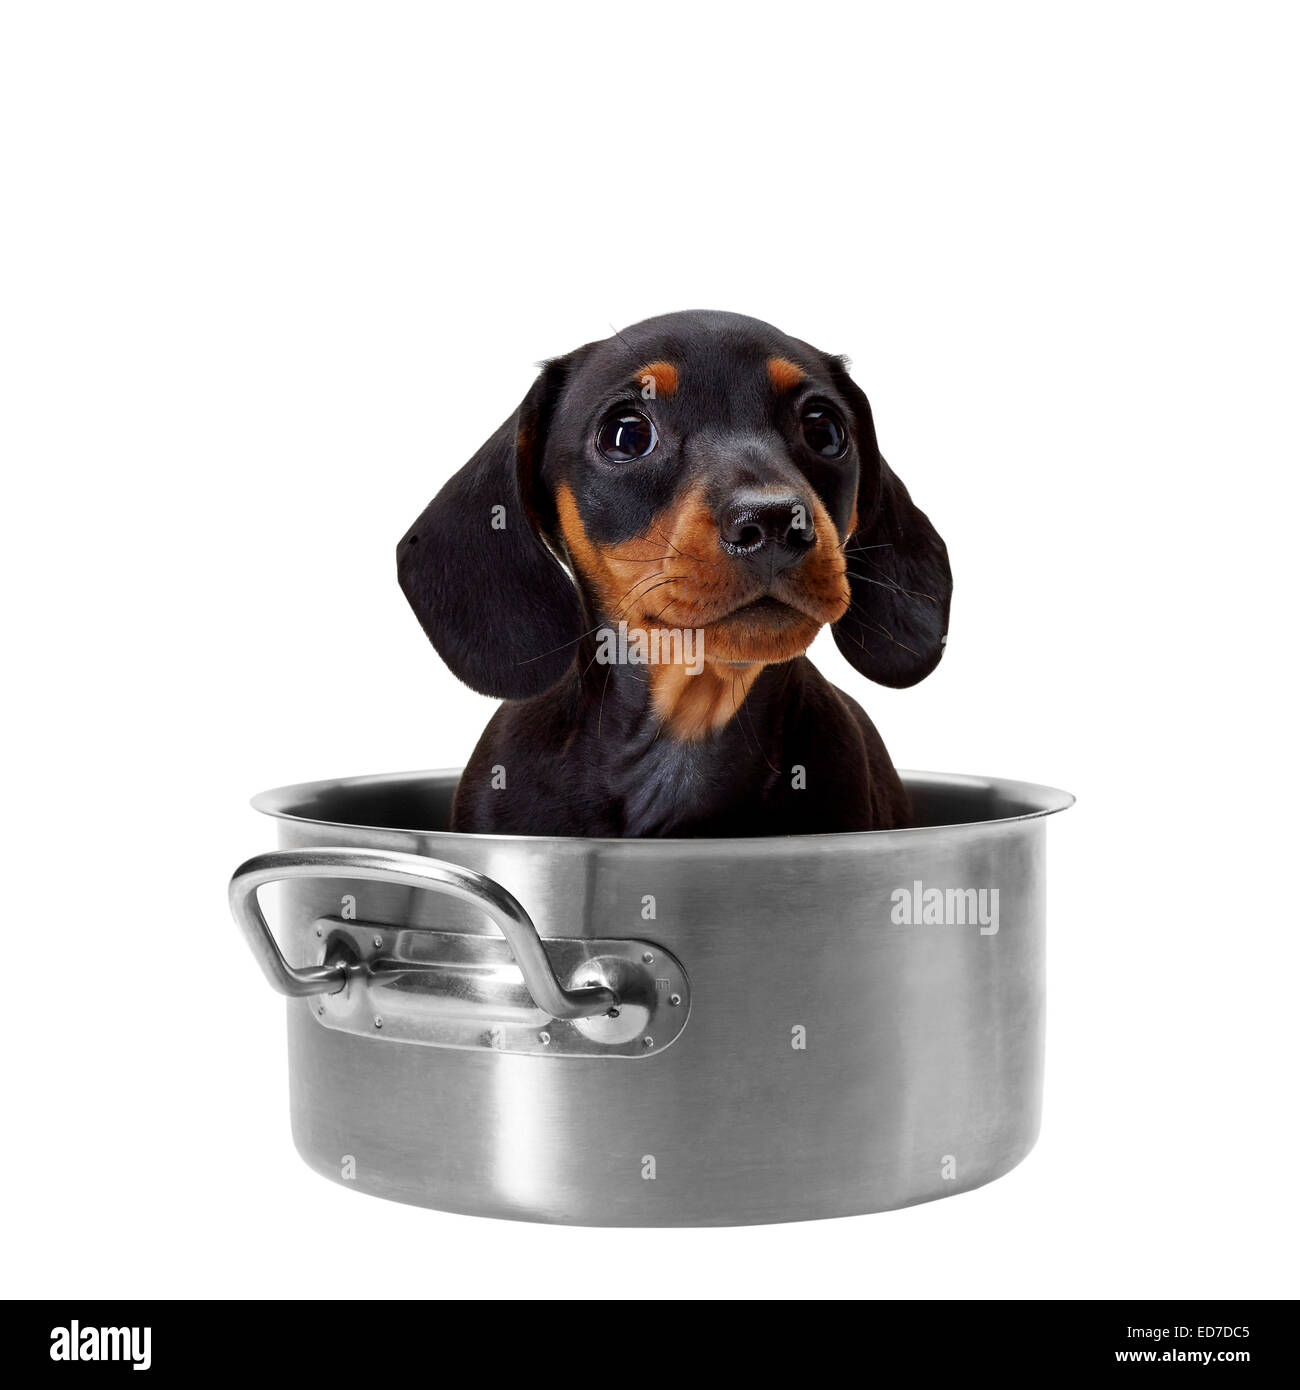 Dachshund puppy sitting inside a saucepan Stock Photo